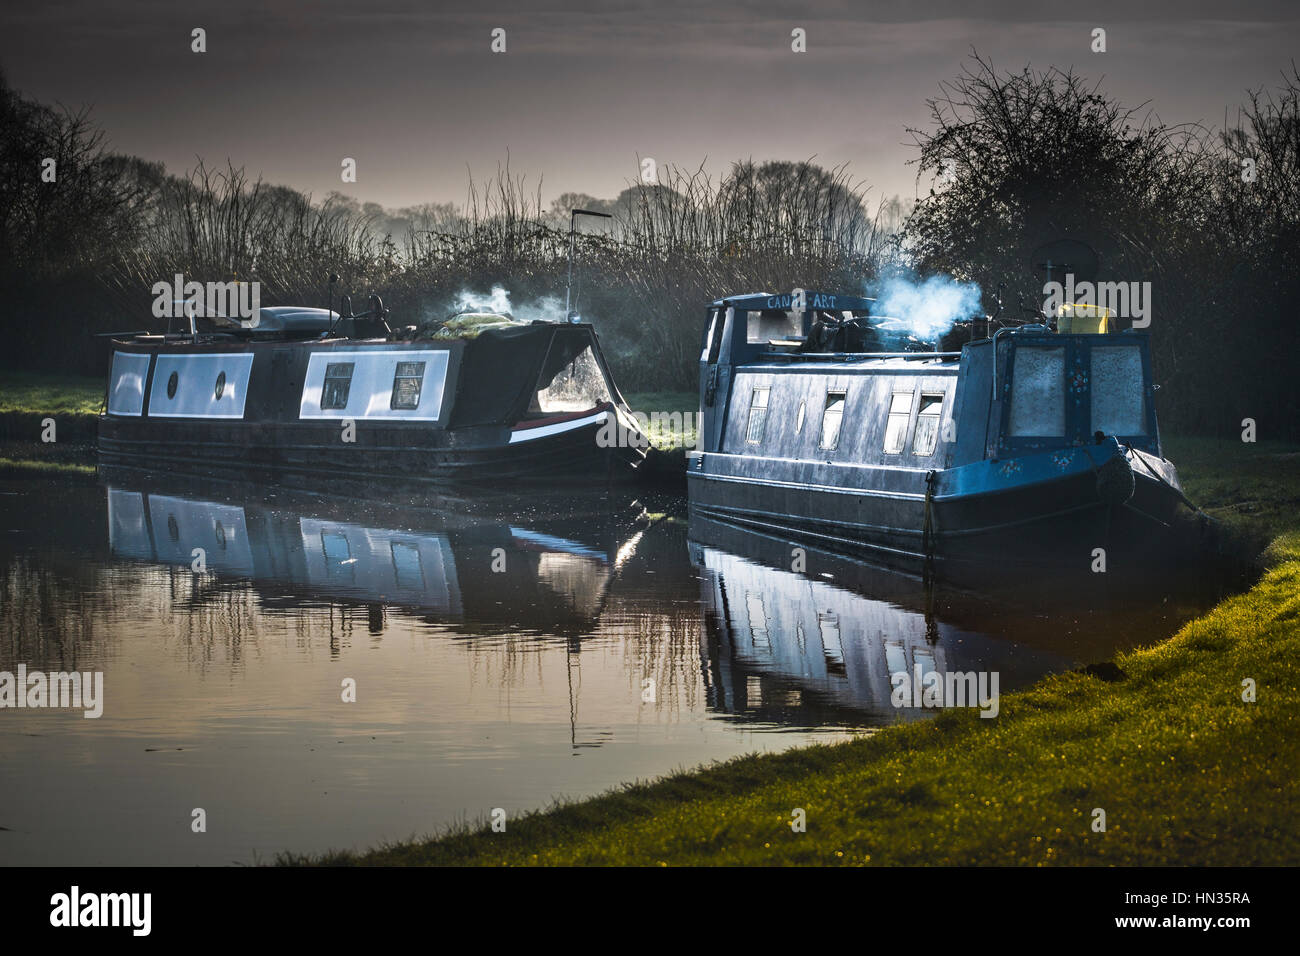 Two narrowboat homes at moorings on a canal. Stock Photo